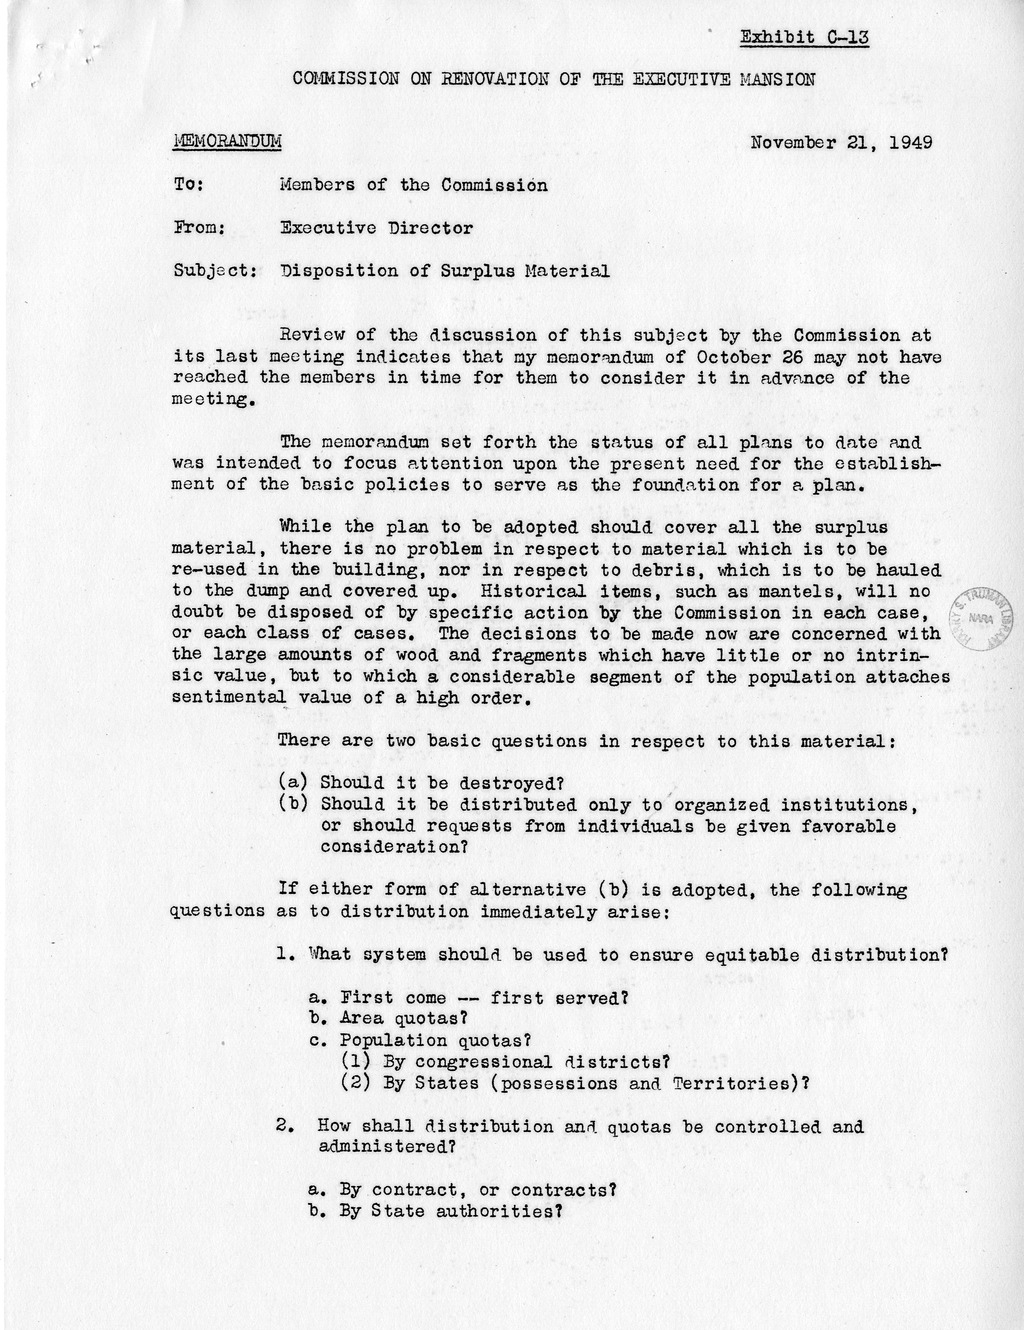 Memorandum from R. E. Dougherty to Major General Glen E. Edgerton with Attachments